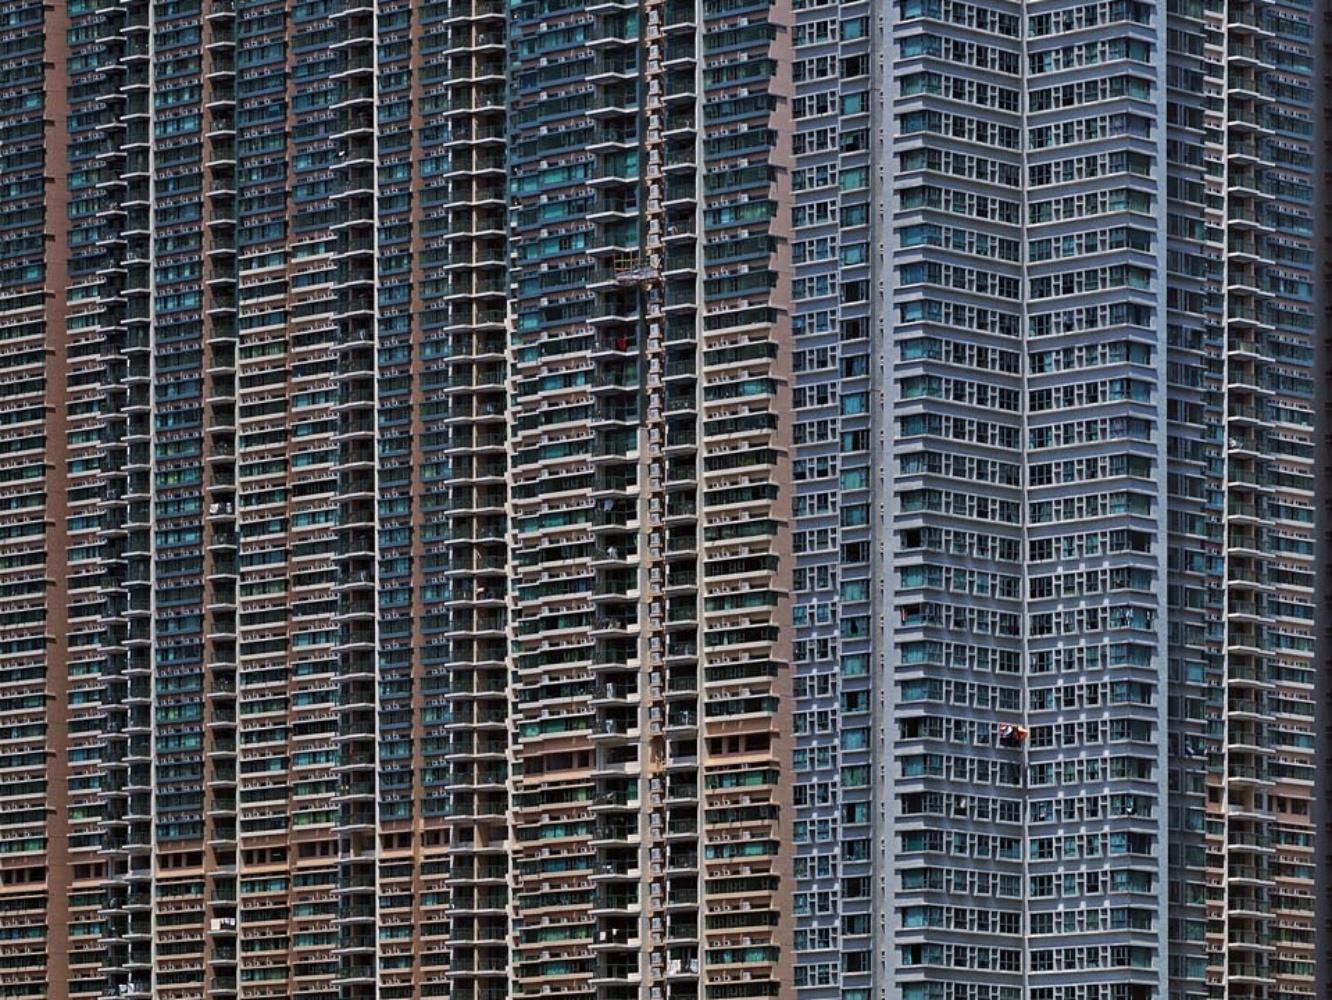 Architecture of Density #57 – Michael Wolf, City, Skyscraper, Architecture, Art For Sale 3